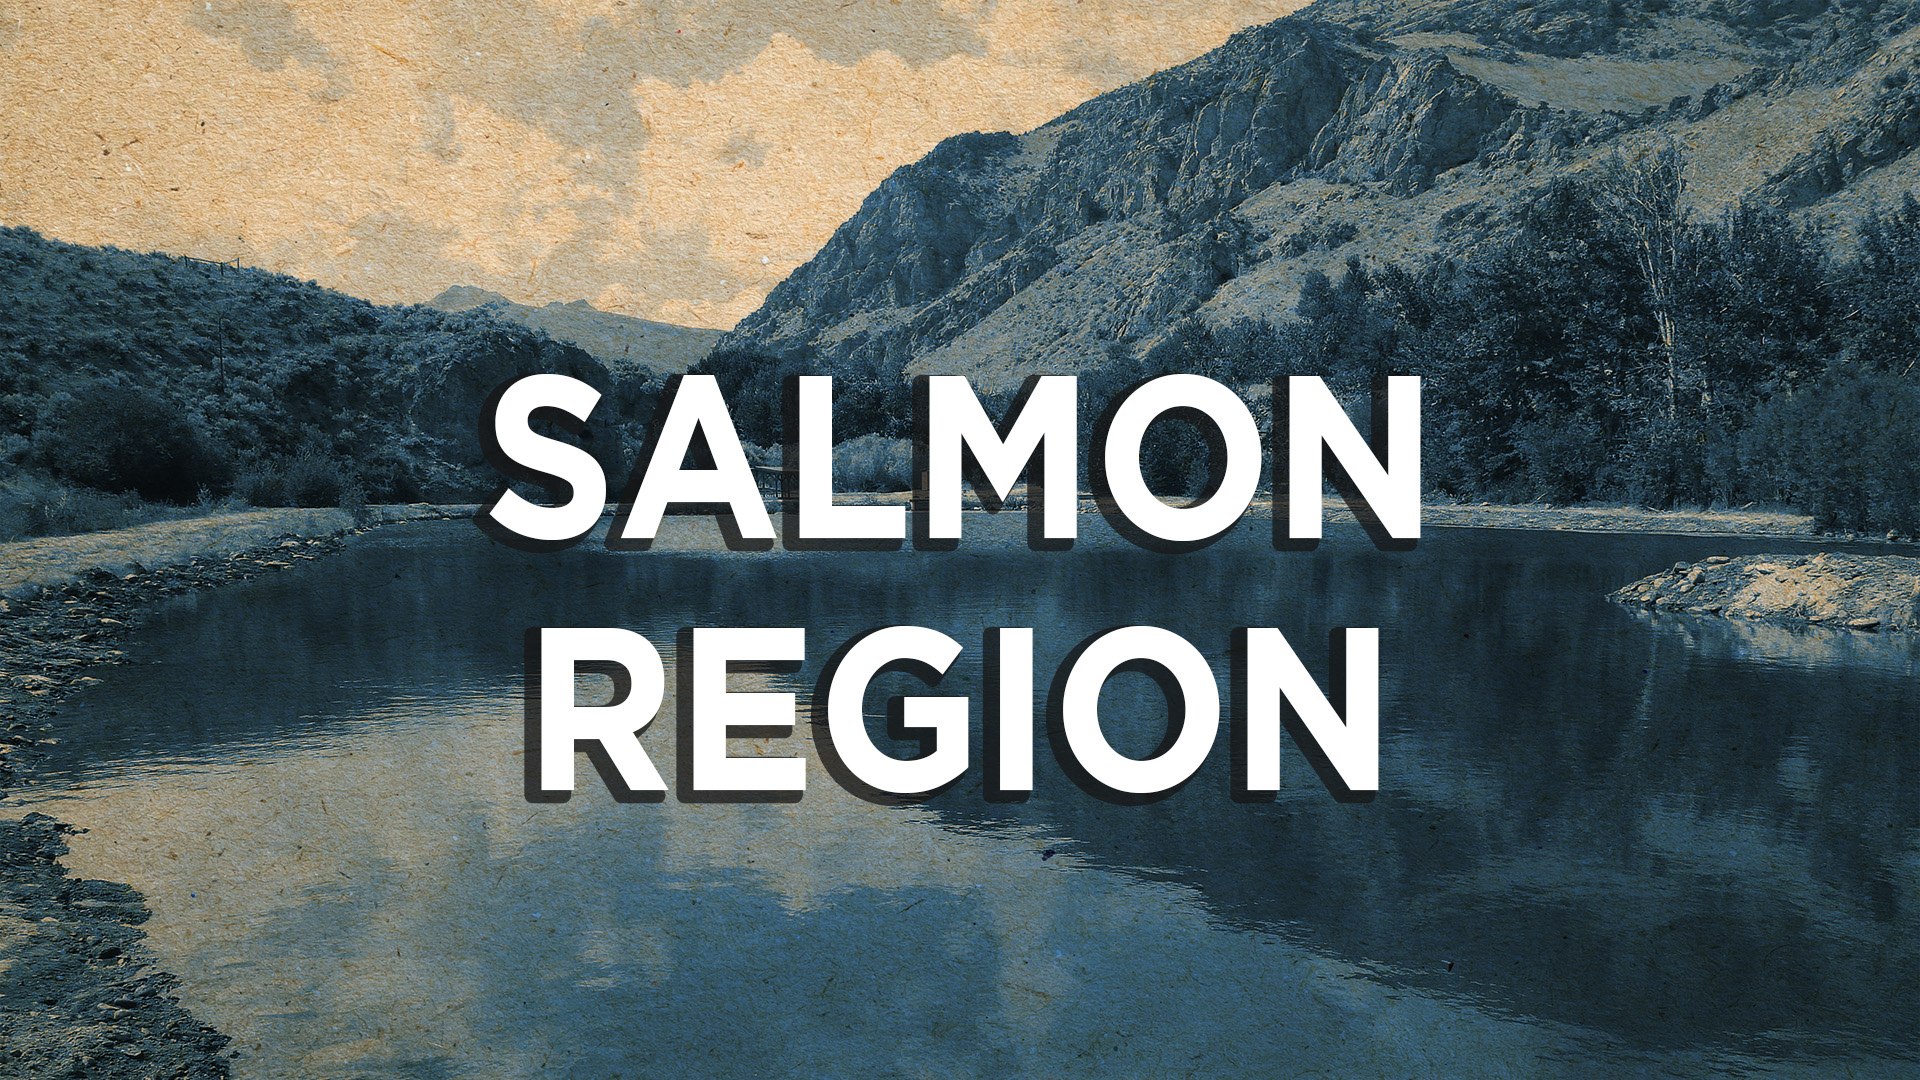 spring-fishing-region-banners-salmon